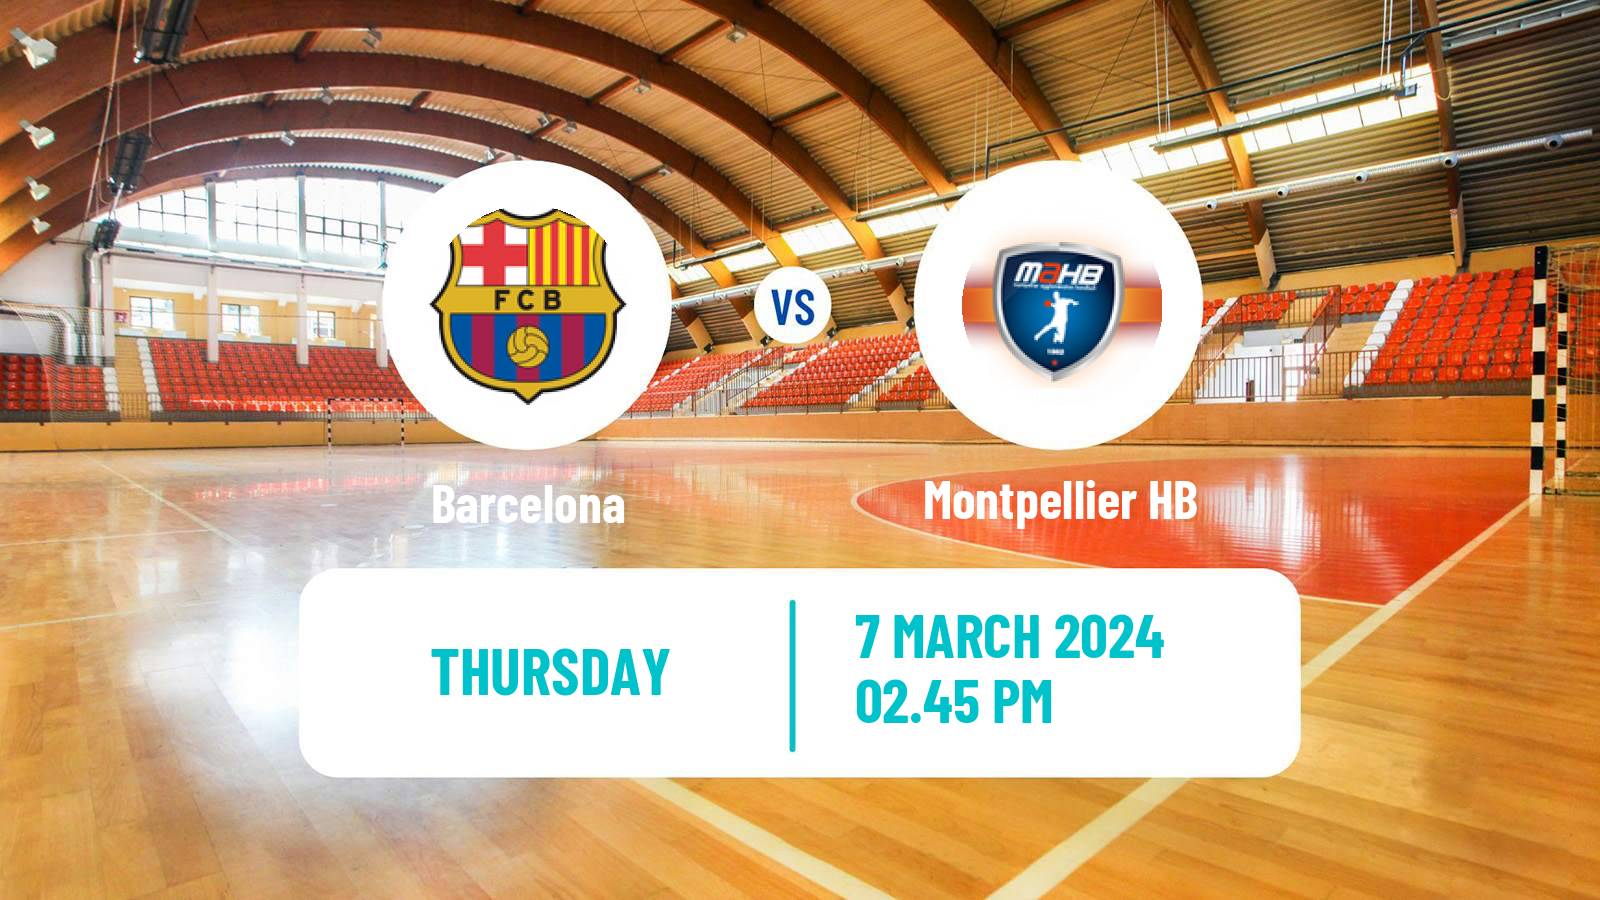 Handball EHF Champions League Barcelona - Montpellier HB